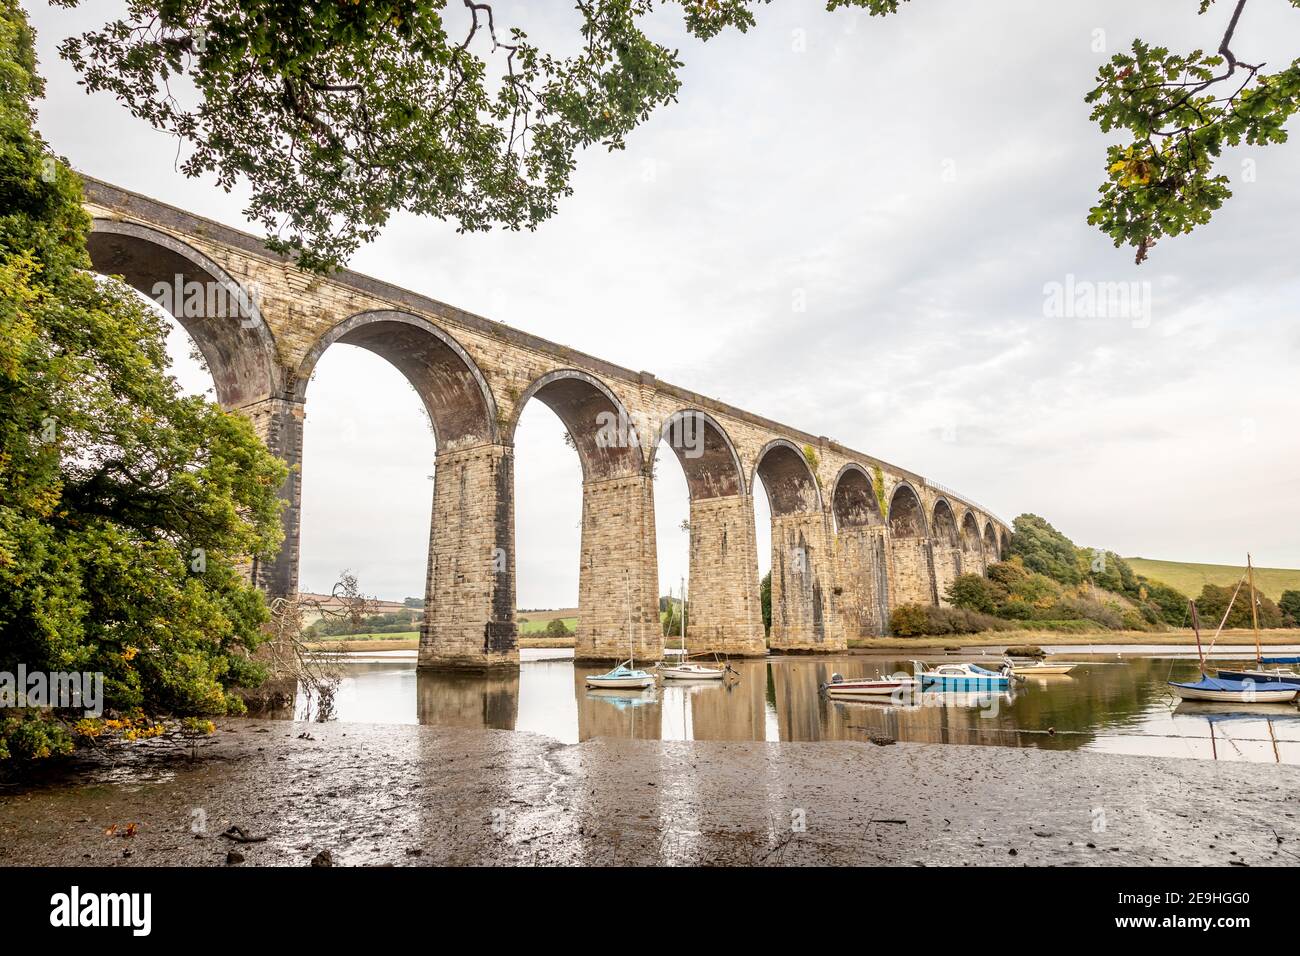 St Germans Viaduct, Cornwall Stock Photo